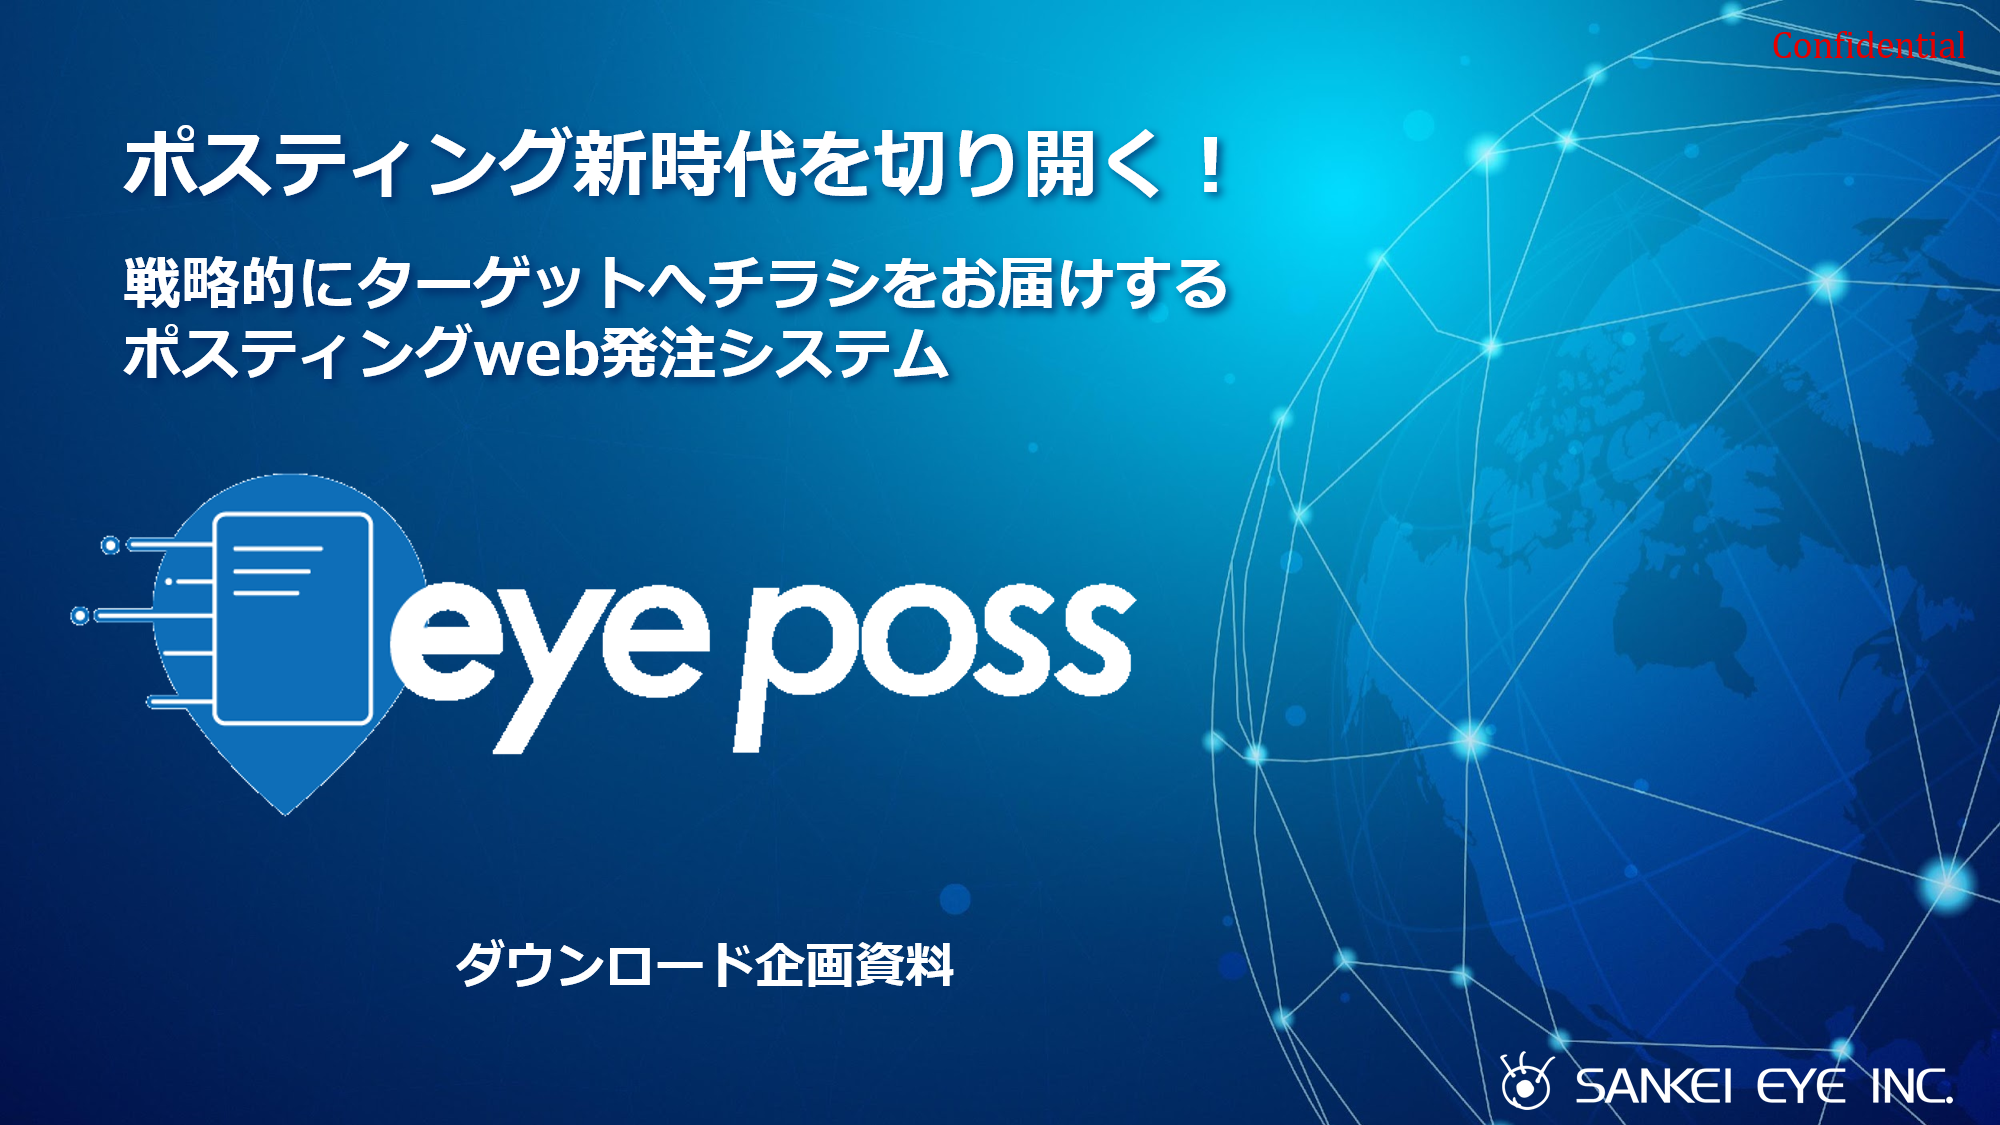 eyeposs資料表紙